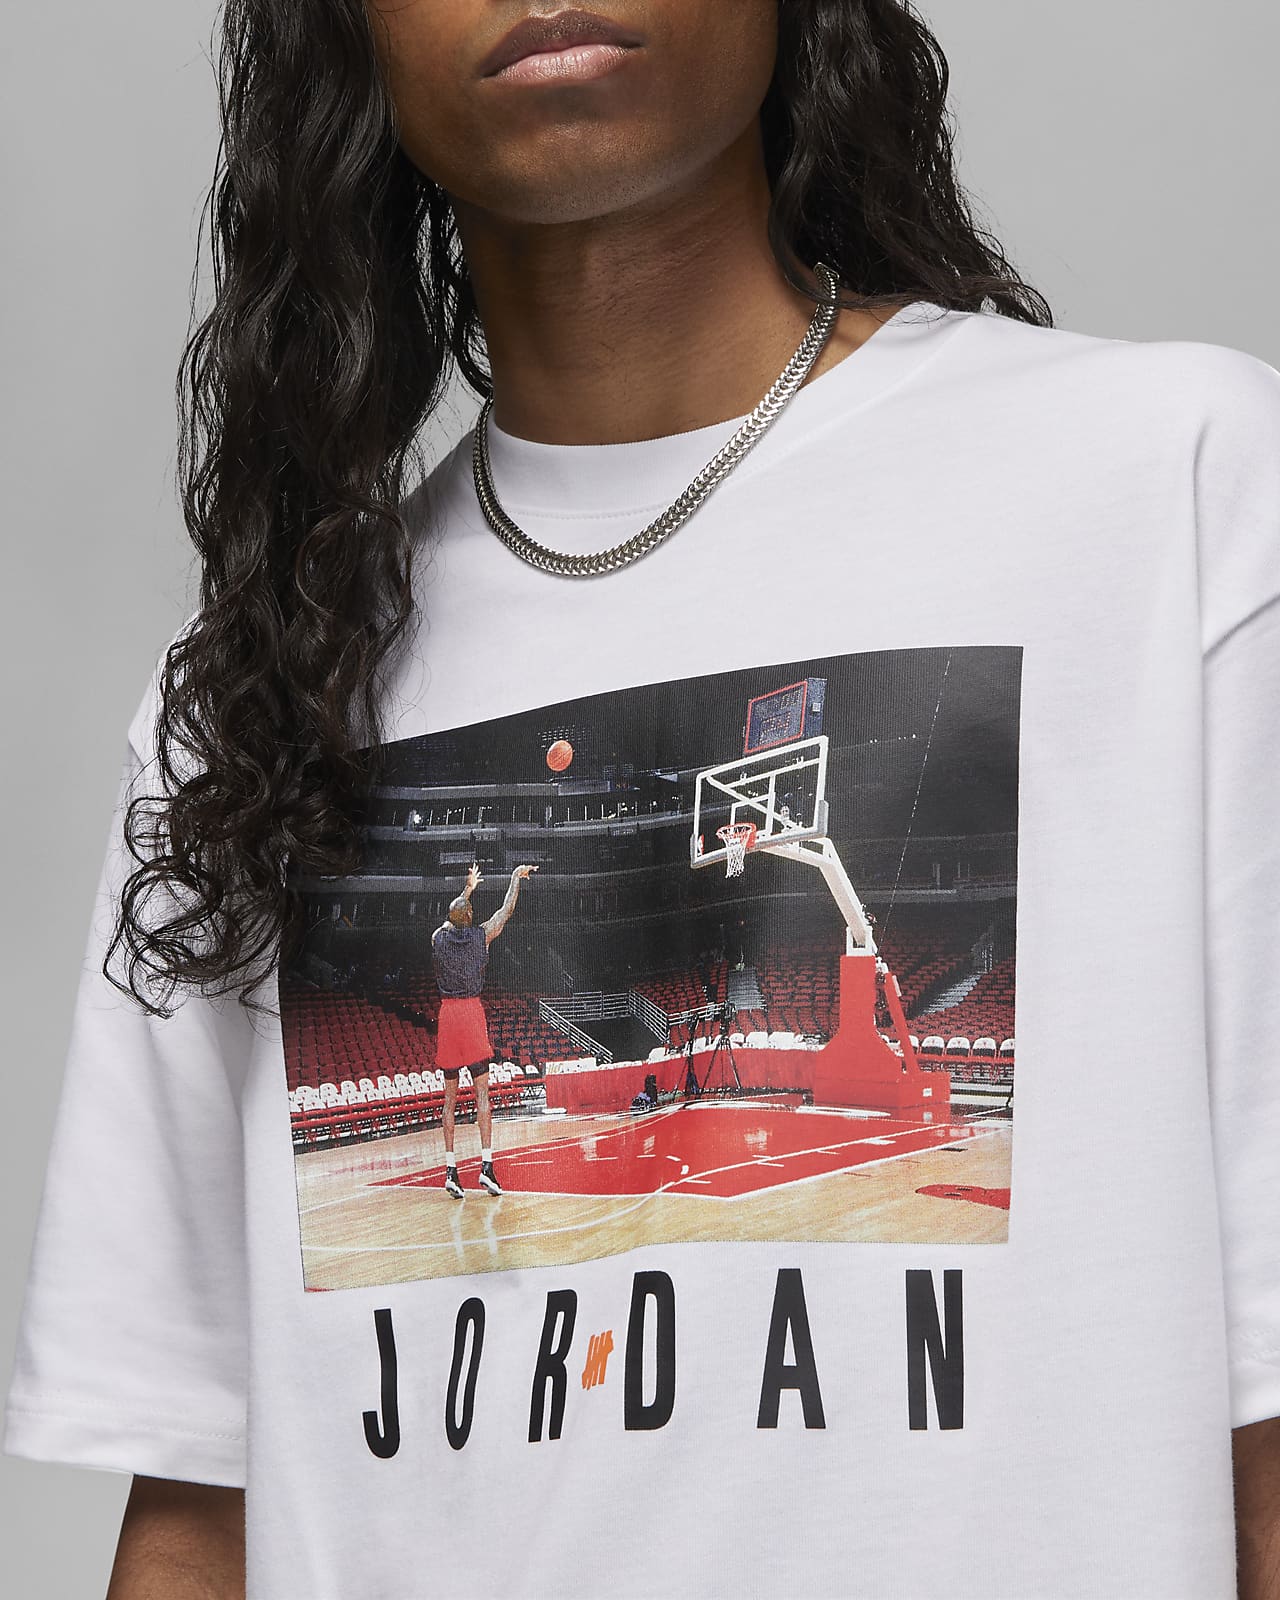 Jordan x UNDEFEATED Men's T-Shirt. Nike NL